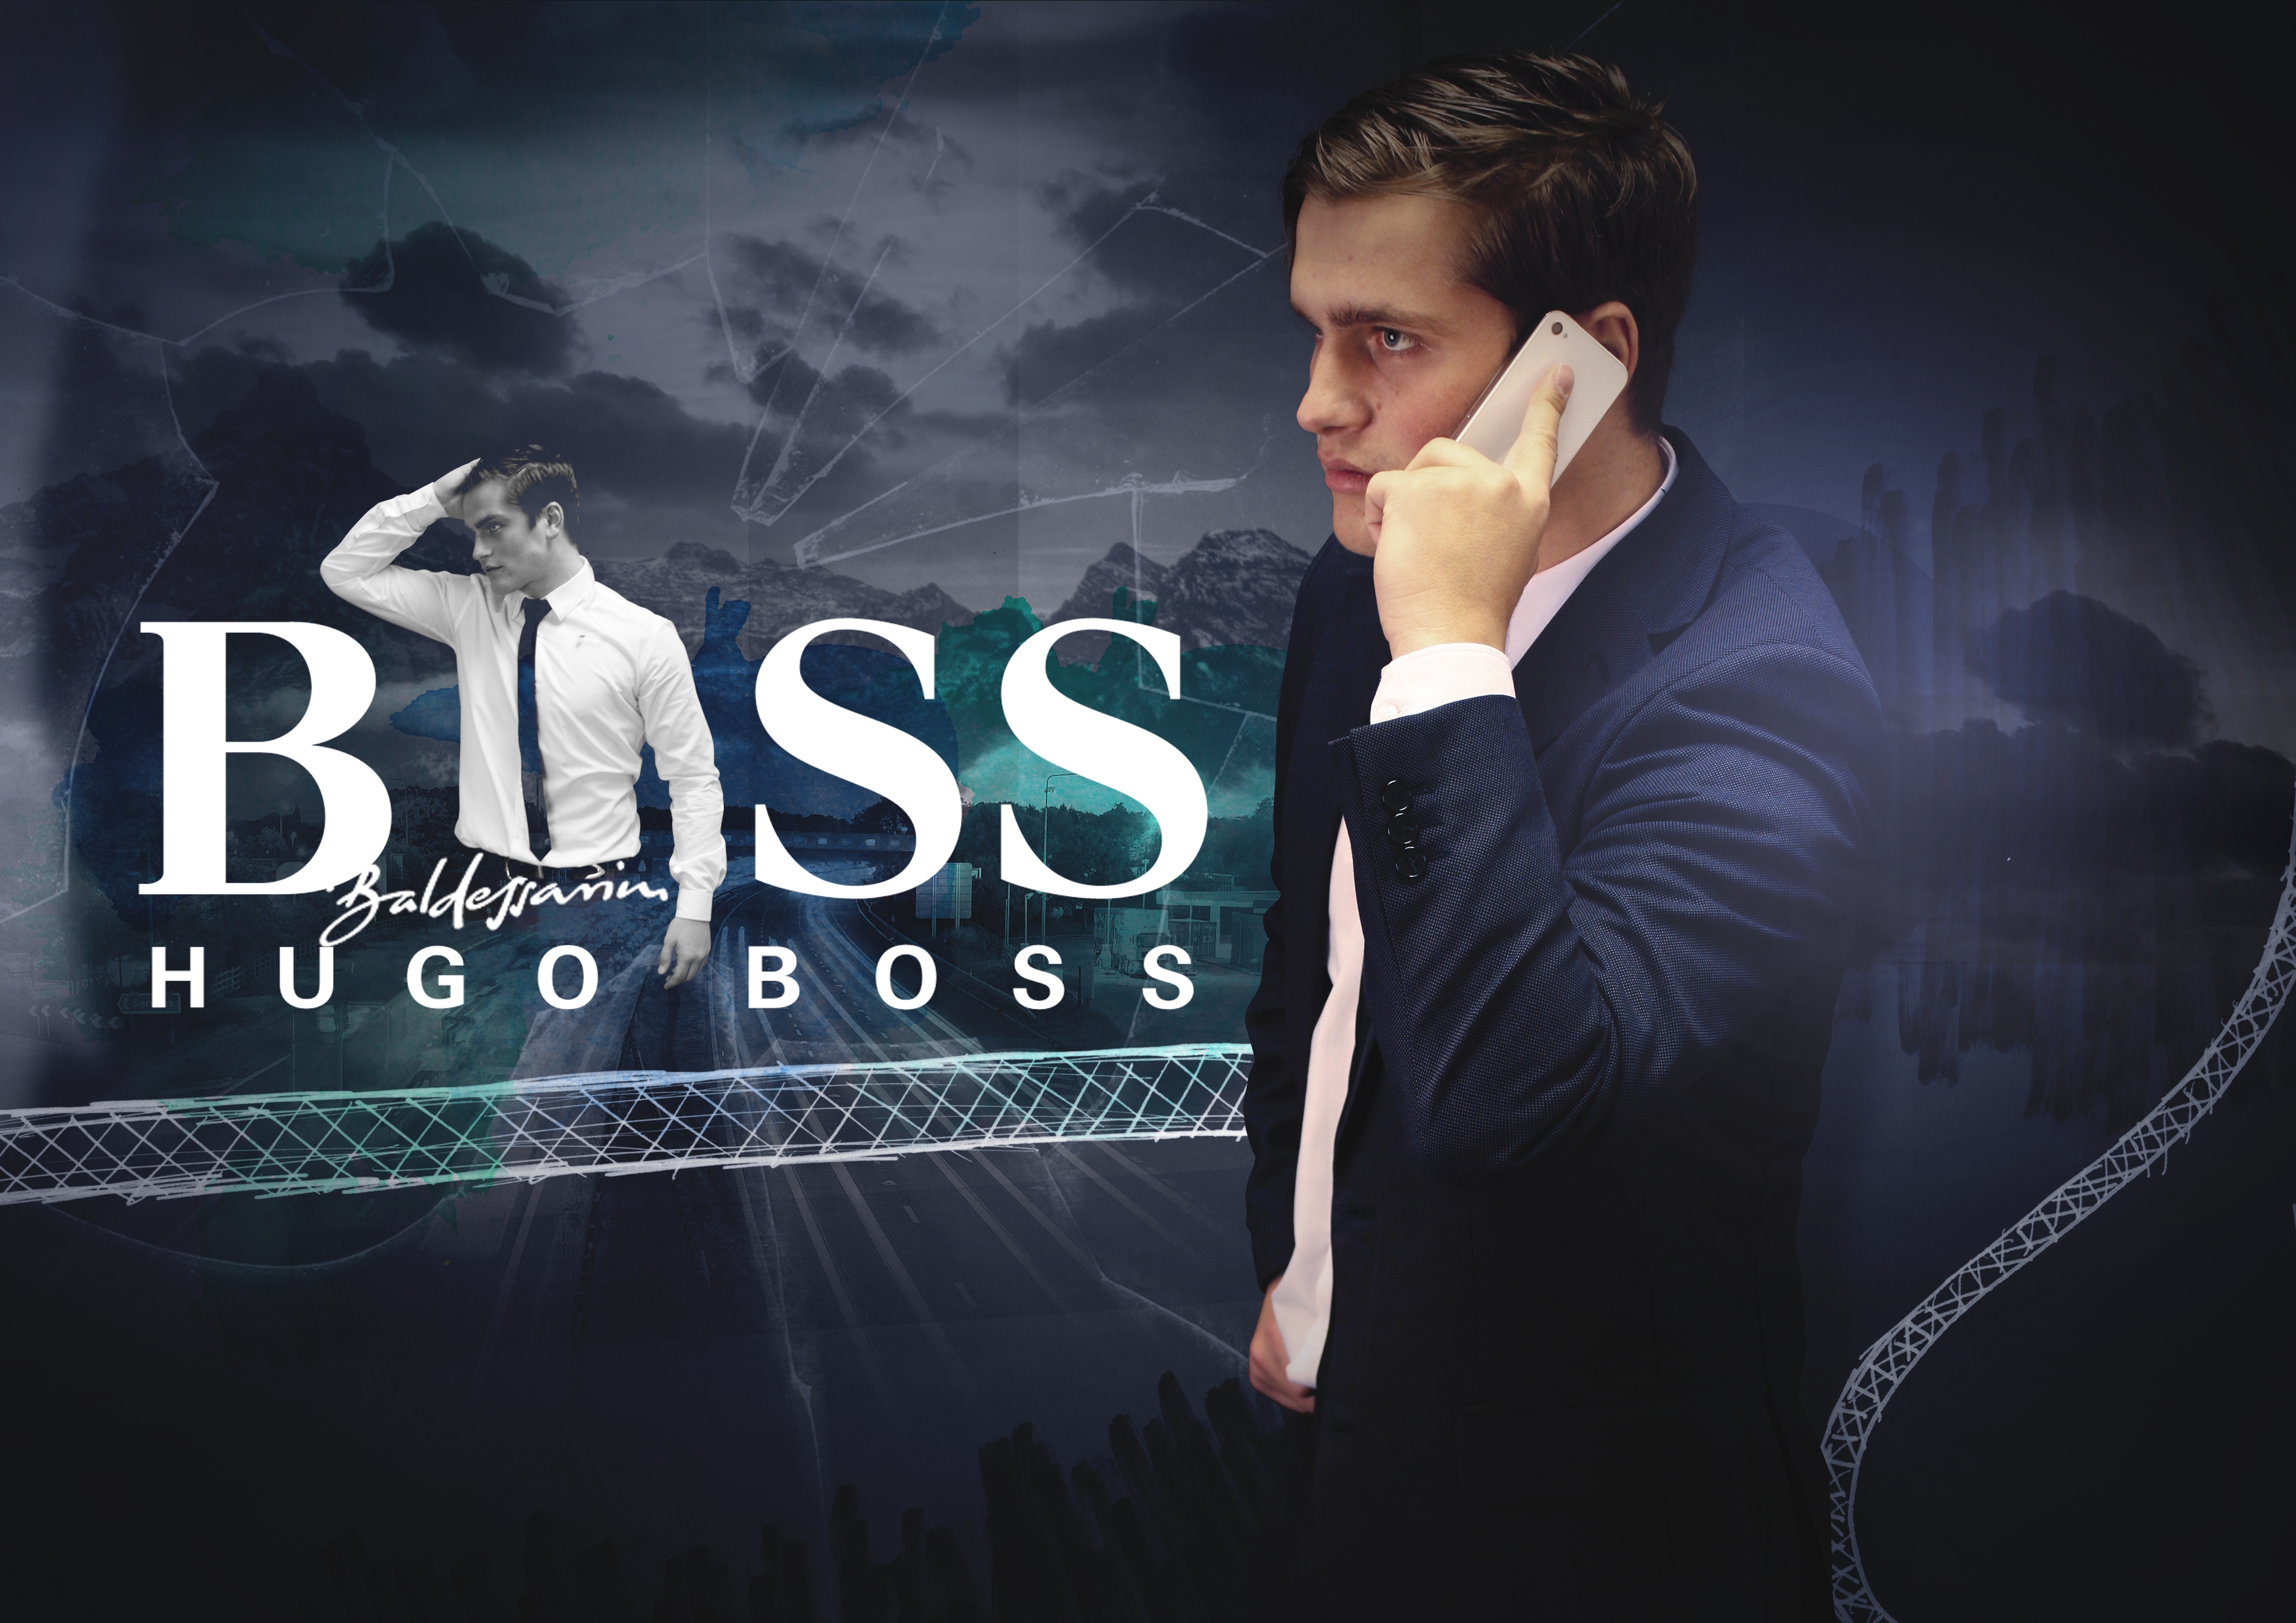 Boss картинка. The Boss. Hugo Boss реклама. Босс фото. Реклама Хьюго босс.